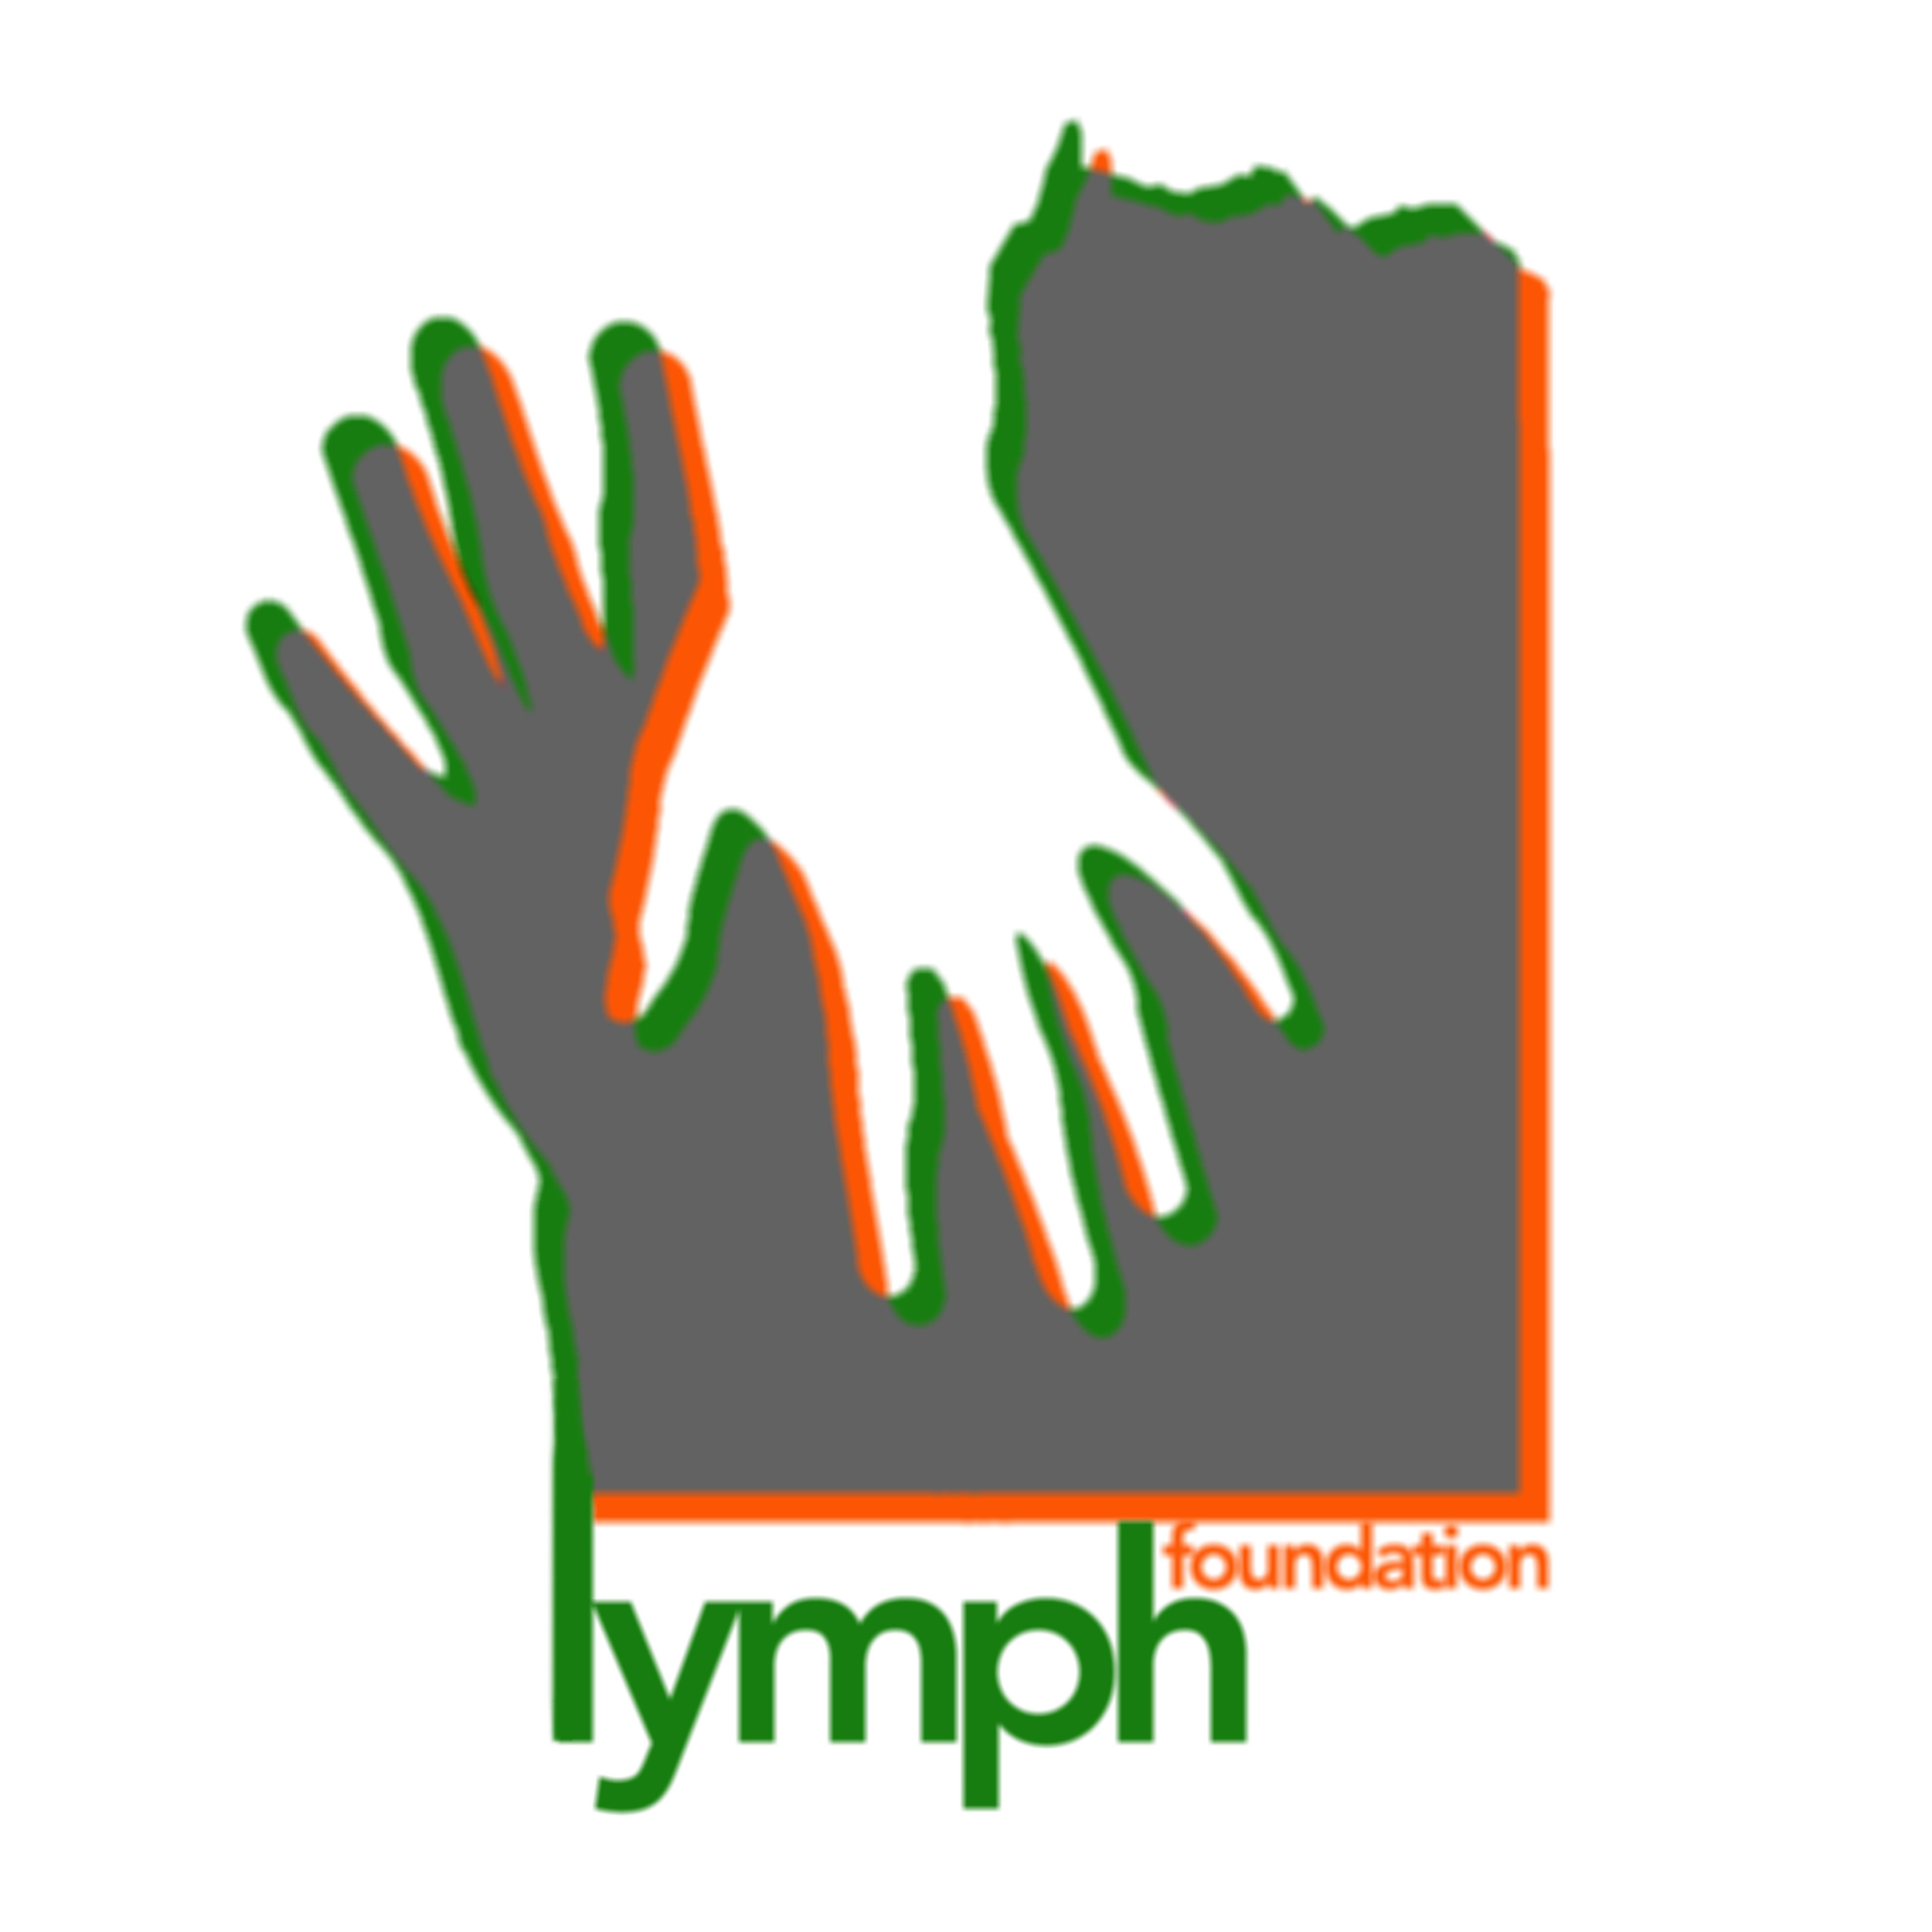 Italia non profit - Lymph Foundation ETS